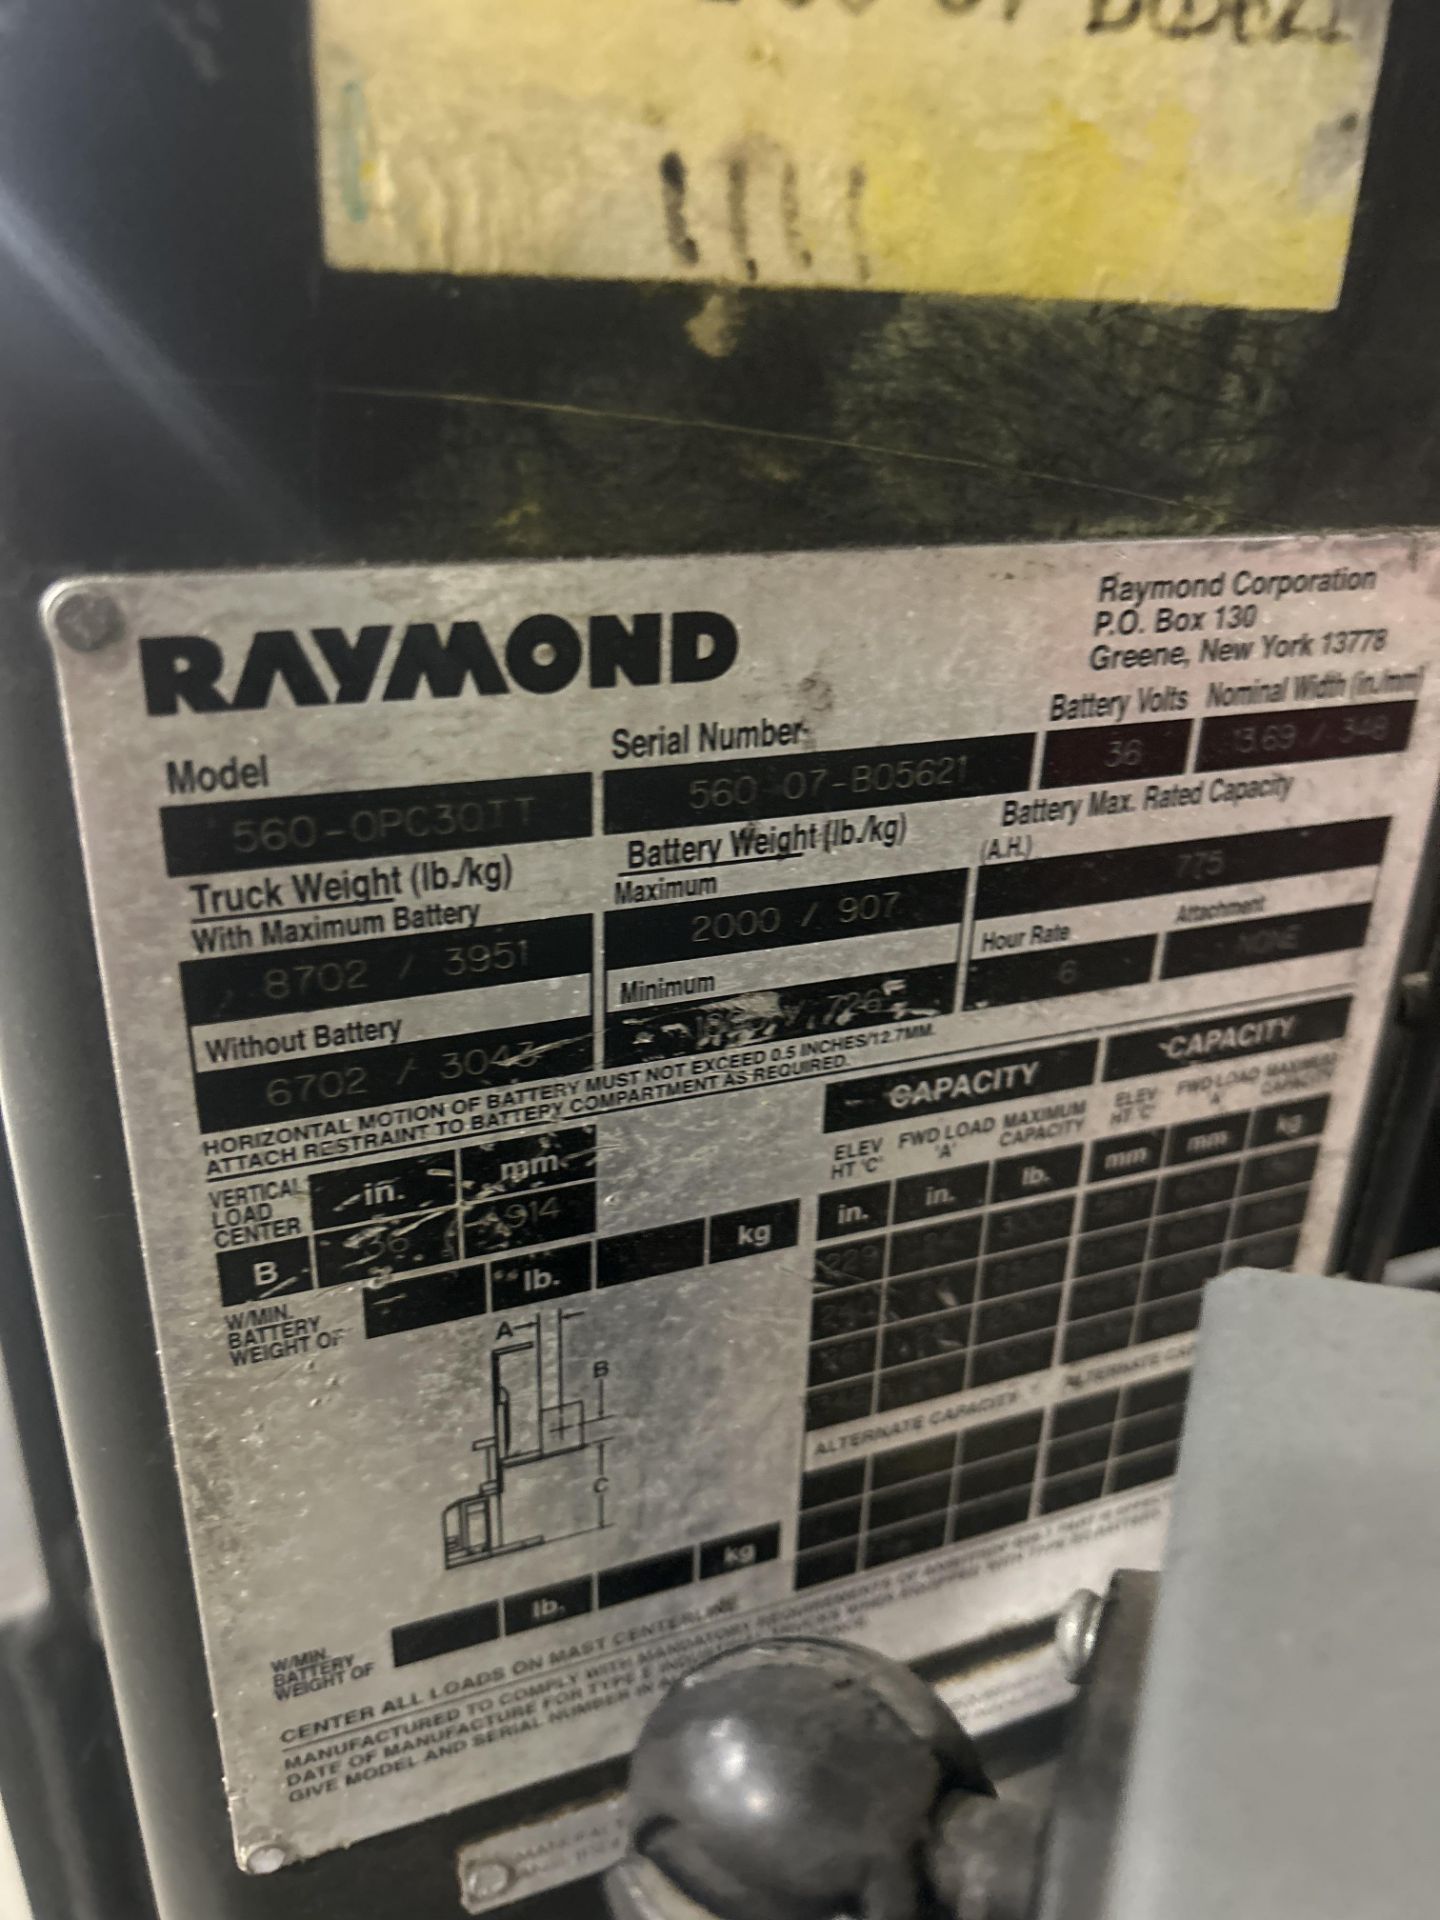 Wire Guided Raymond Order Picker Model 560-OPC30TT - Image 4 of 4